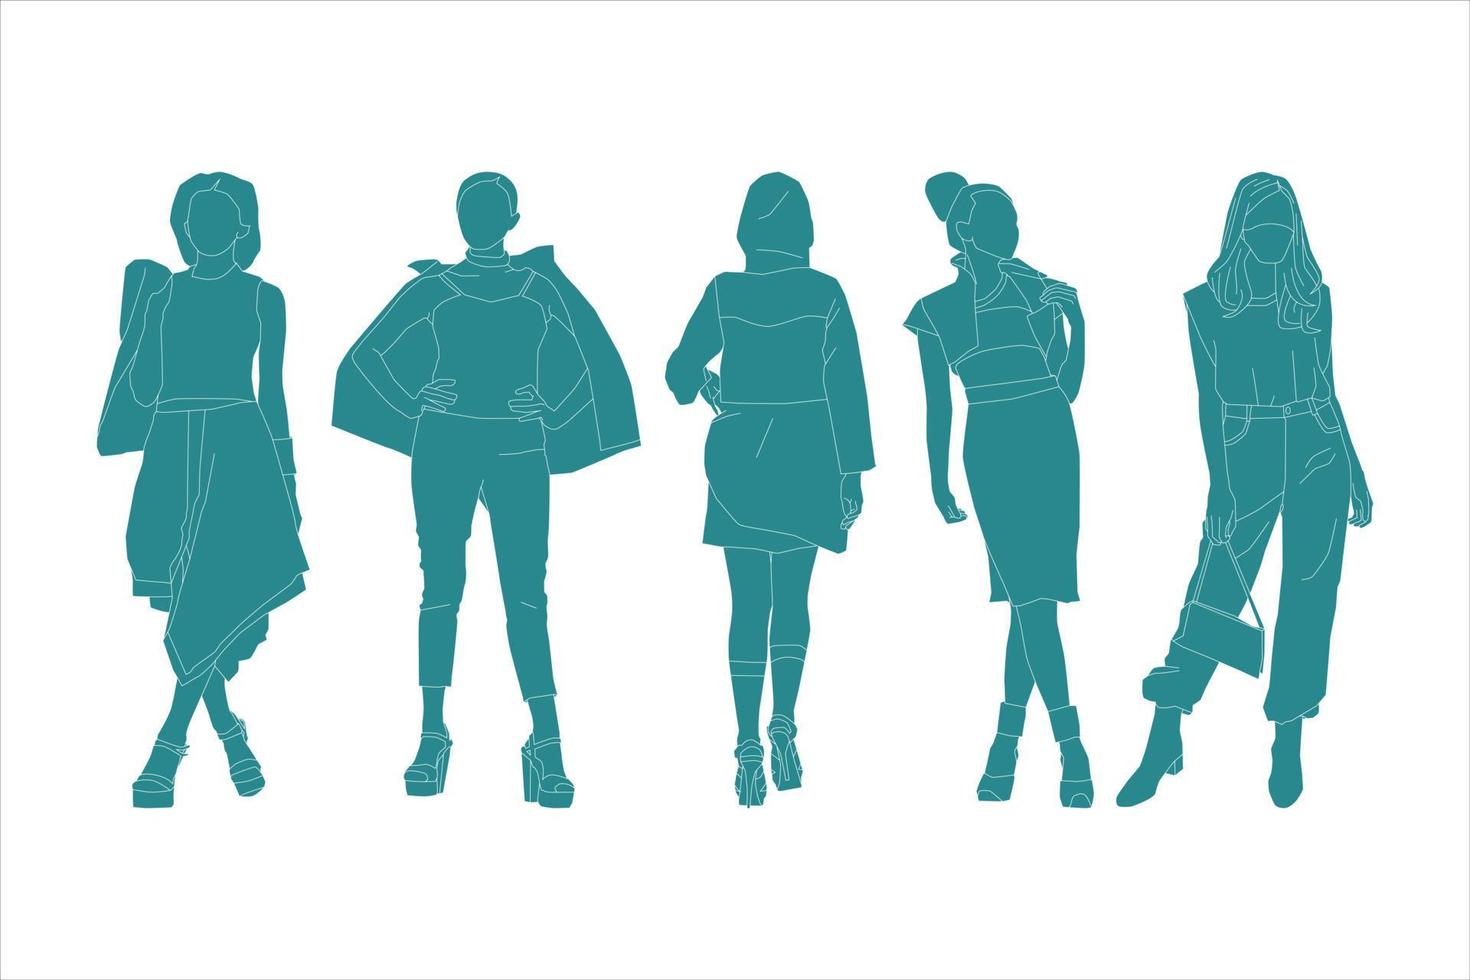 Vector illustration of fashionable women bundle